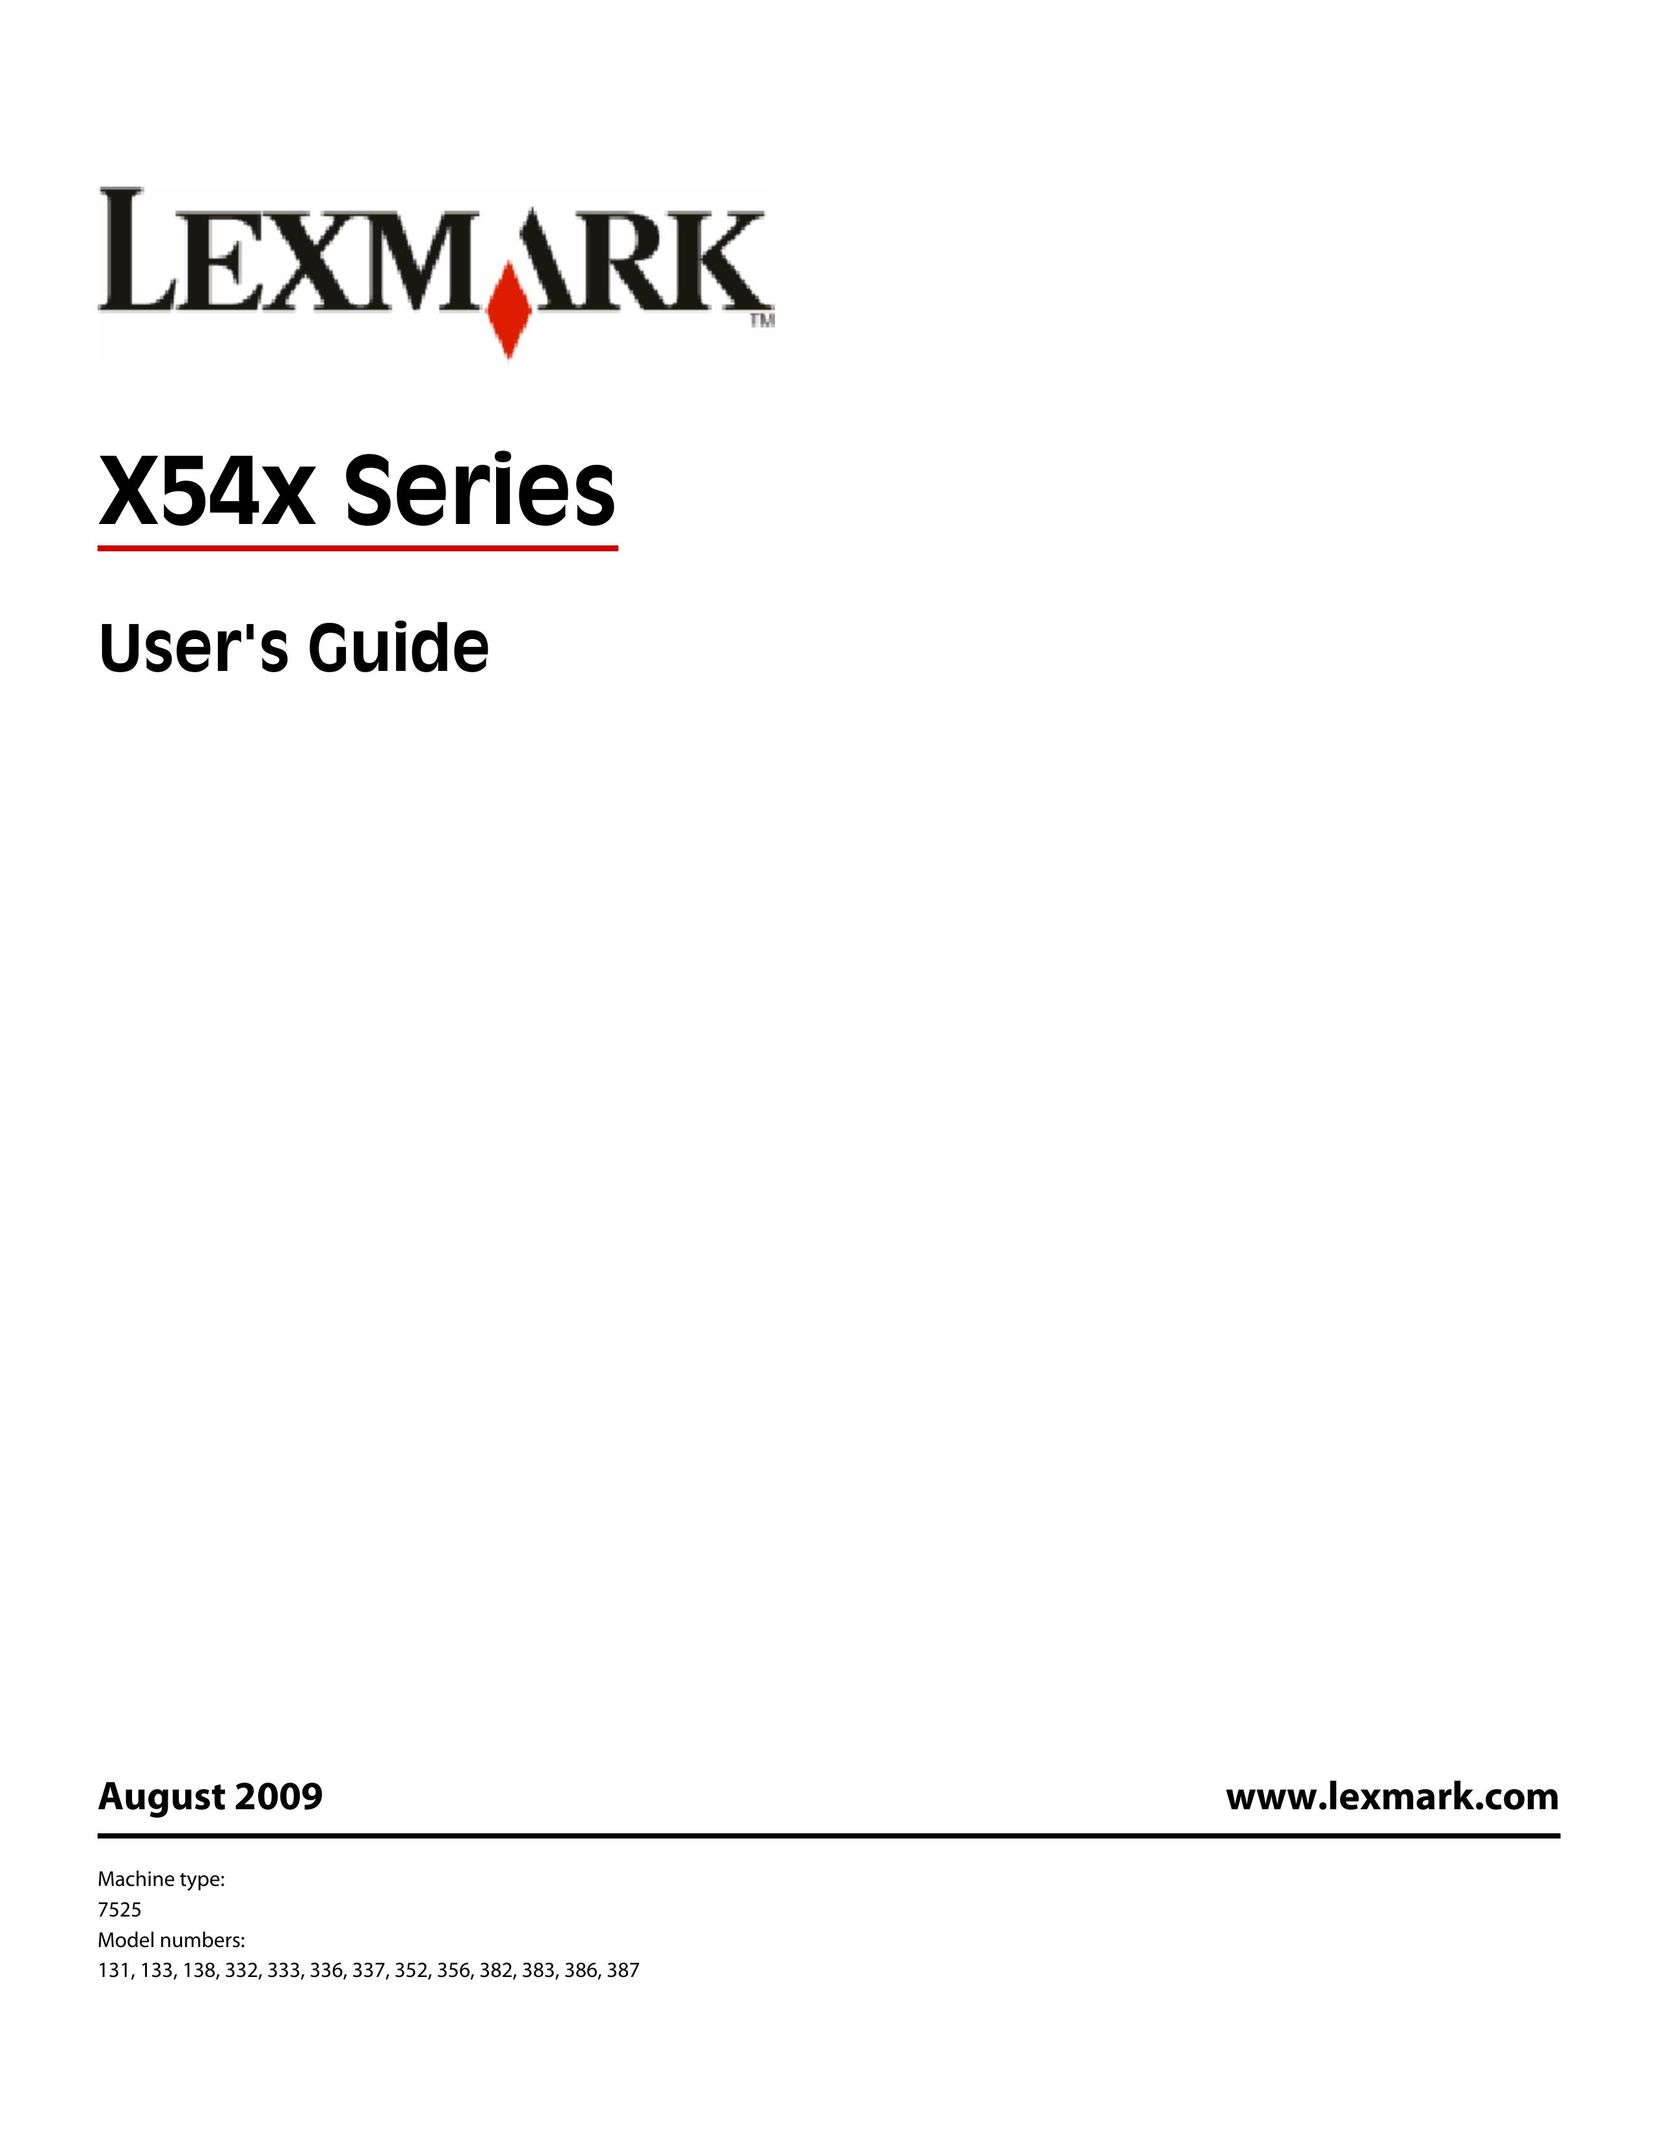 Lexmark 337 All in One Printer User Manual